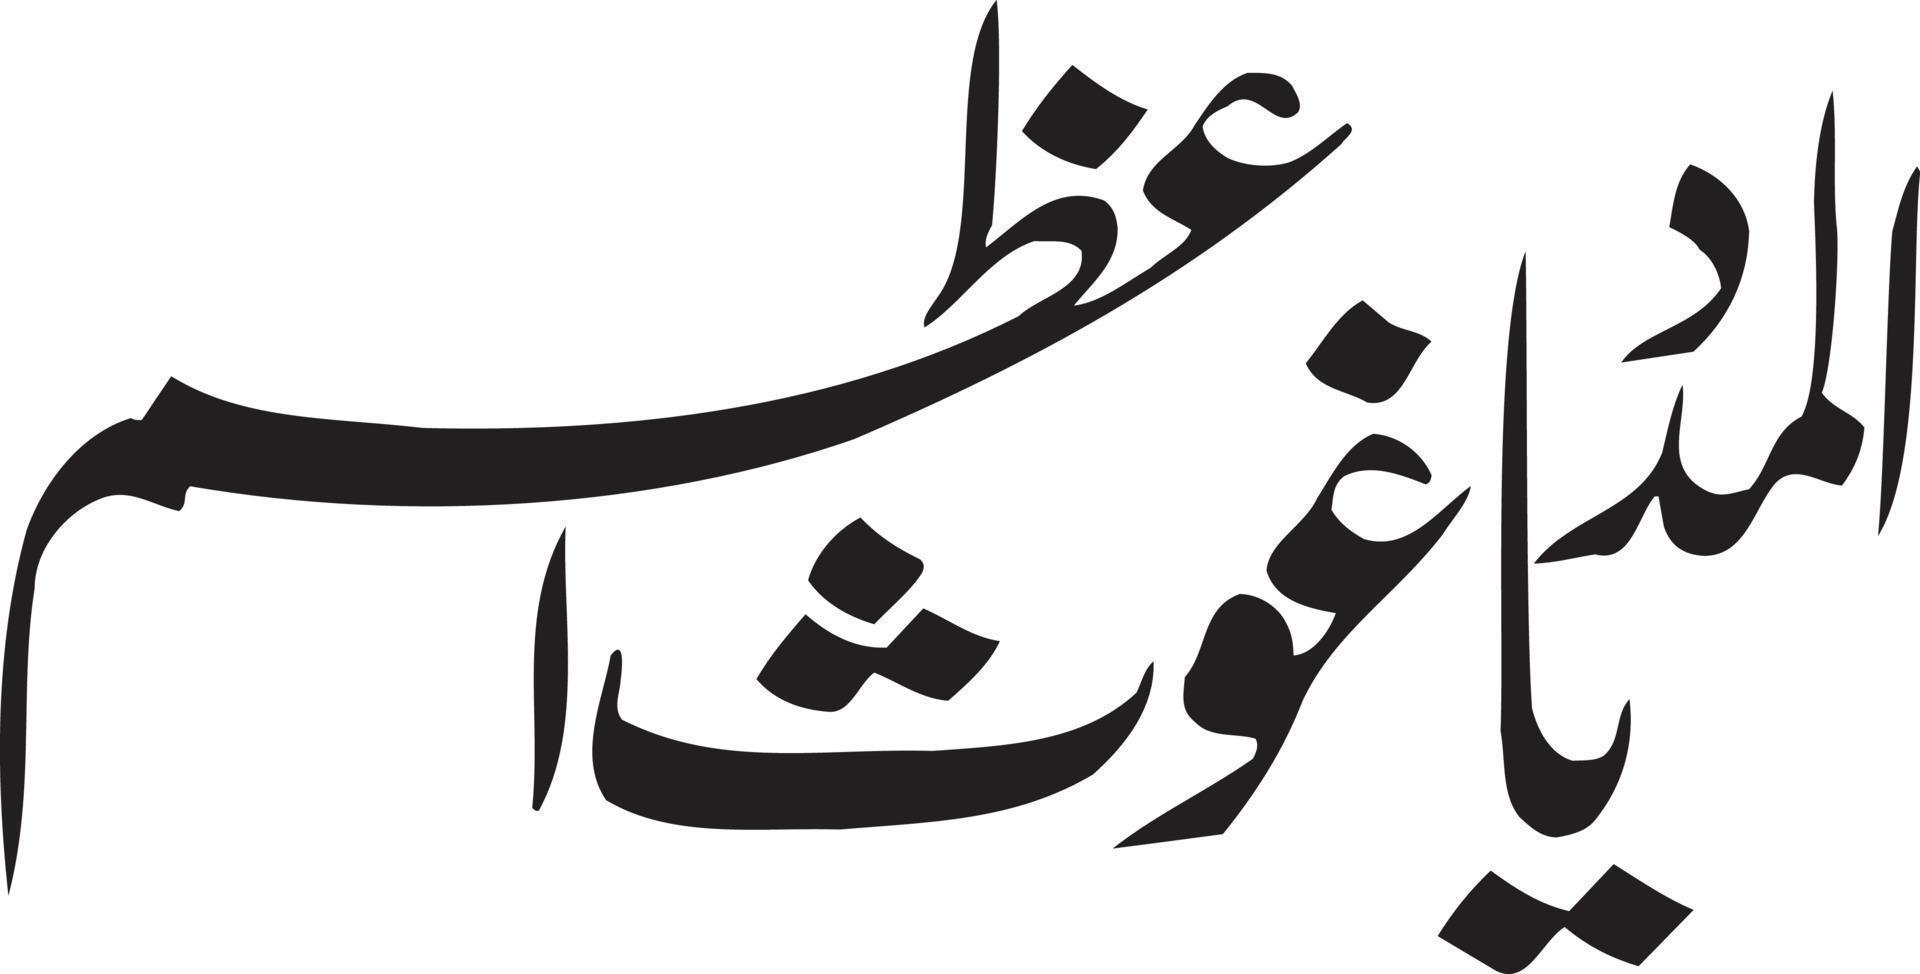 almad ya ghos azam vetor livre de caligrafia islâmica